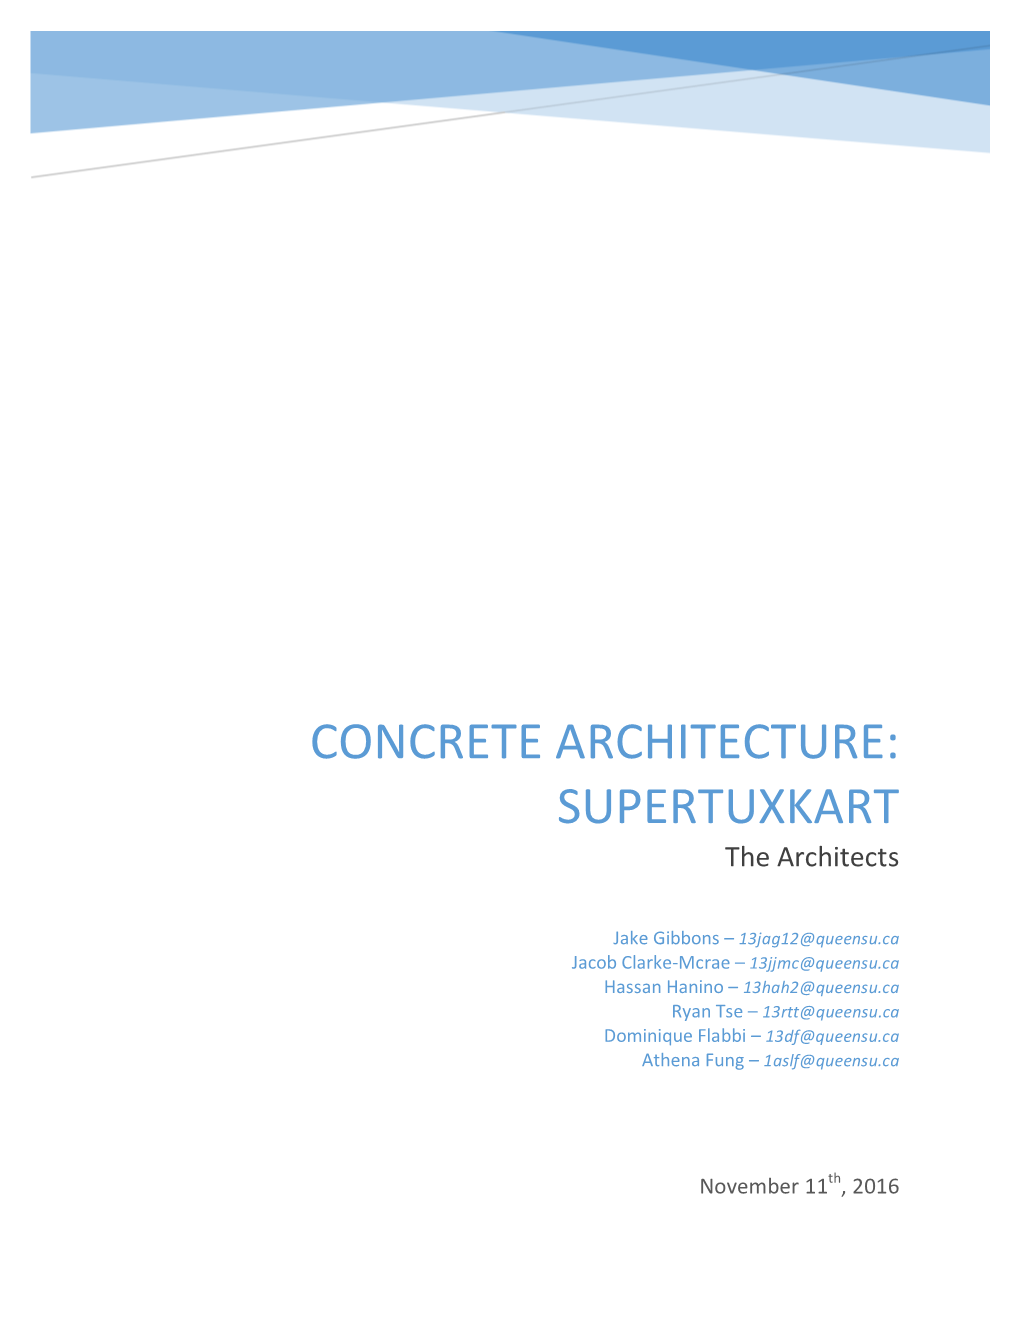 CONCRETE ARCHITECTURE: SUPERTUXKART the Architects